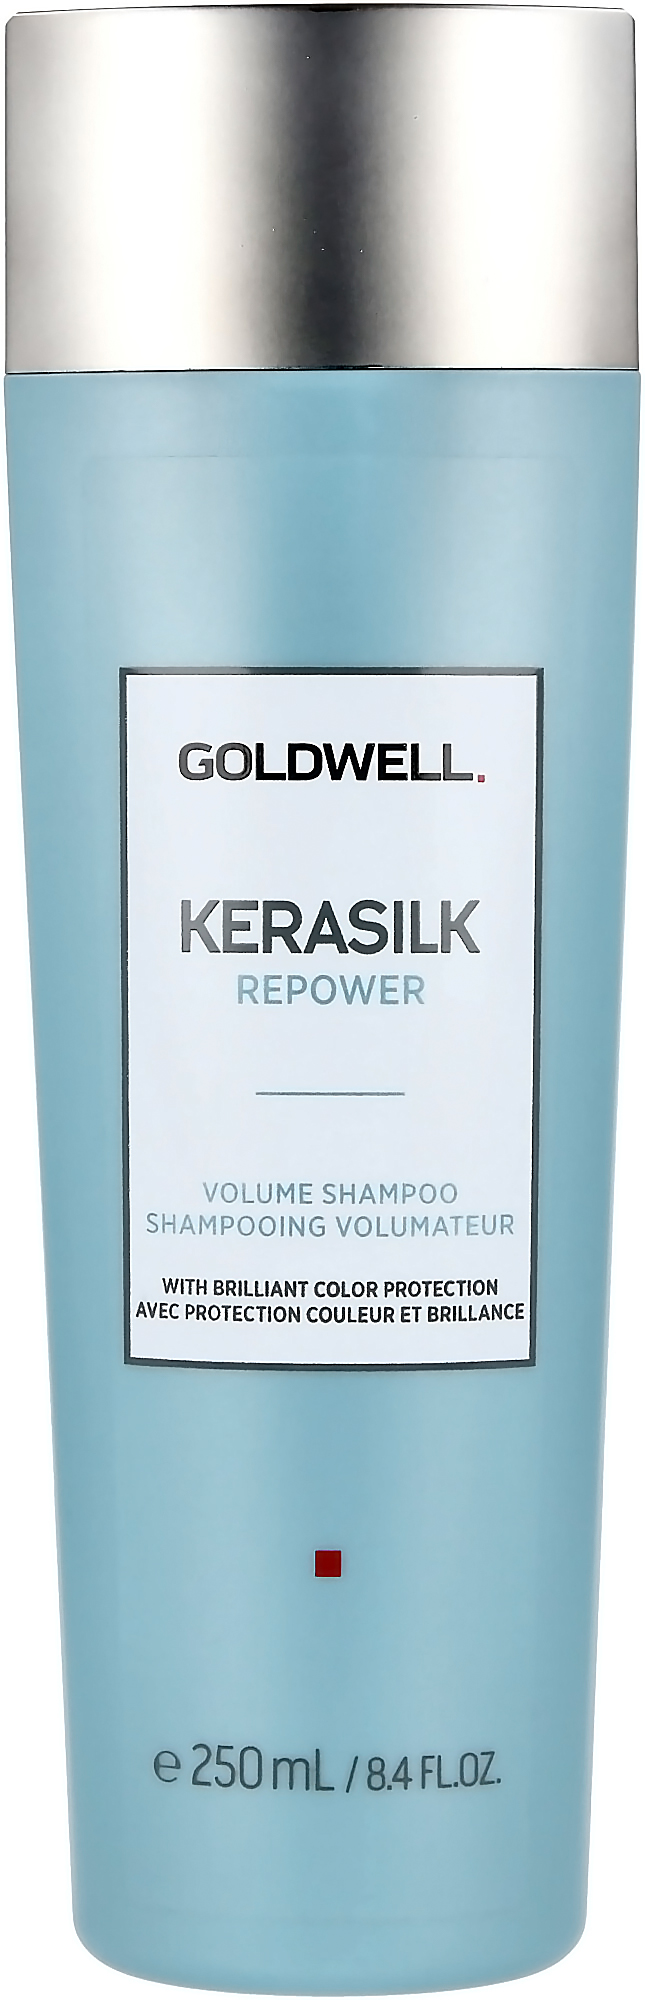 Goldwell Kerasilk Repower Volume Shampoo 250ml